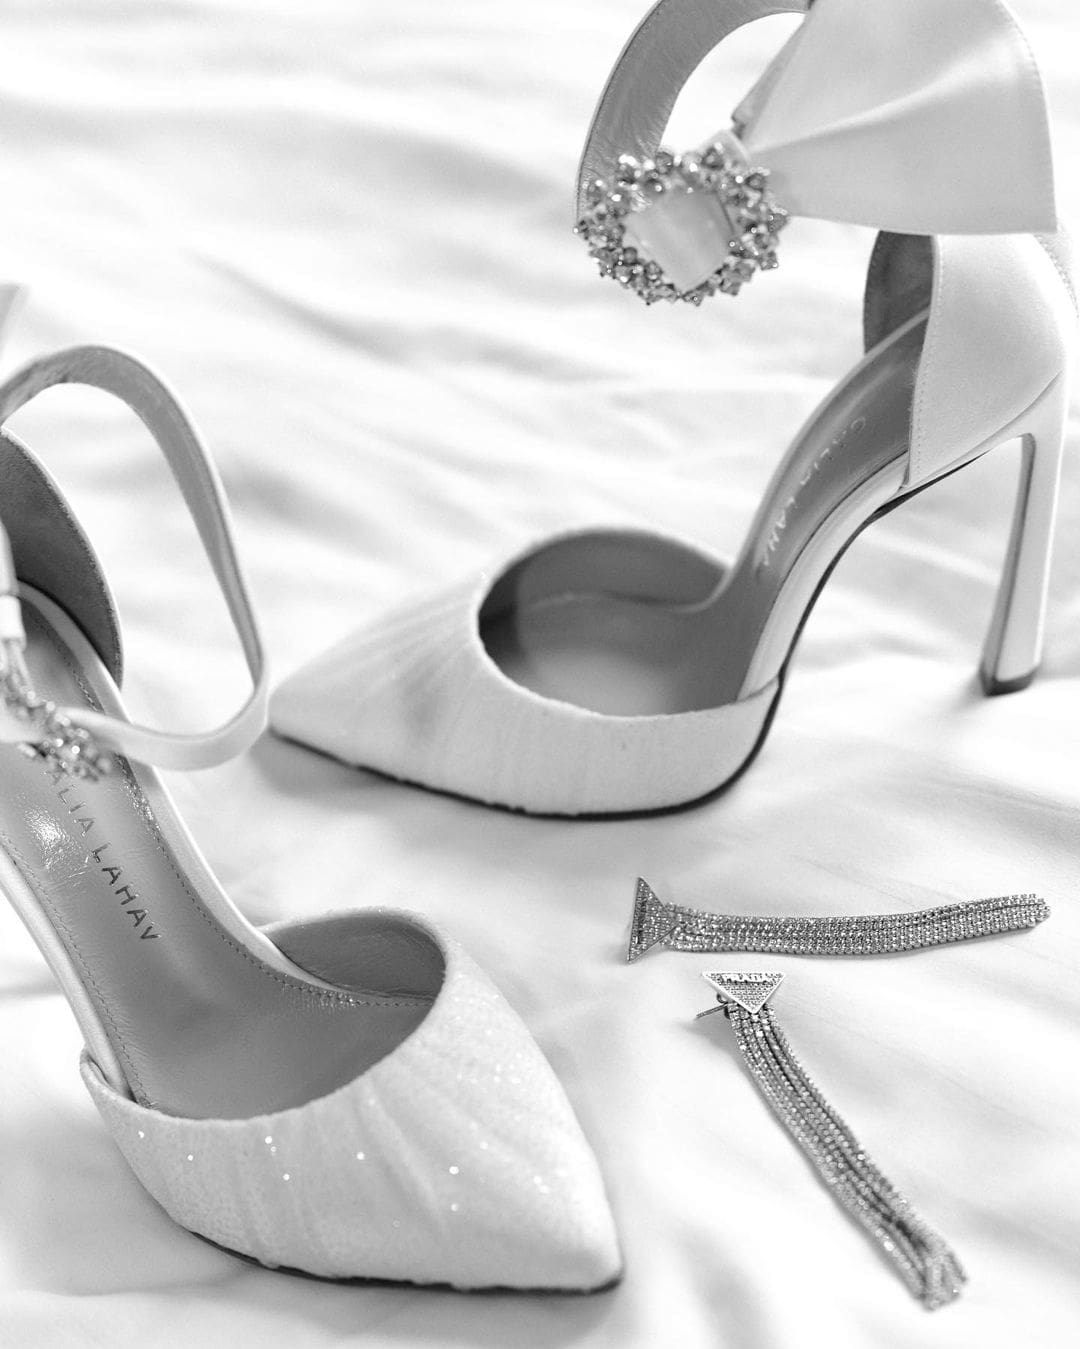 Zapatos de novia blancos elegantes colocados junto a un kit de emergencia para bodas.